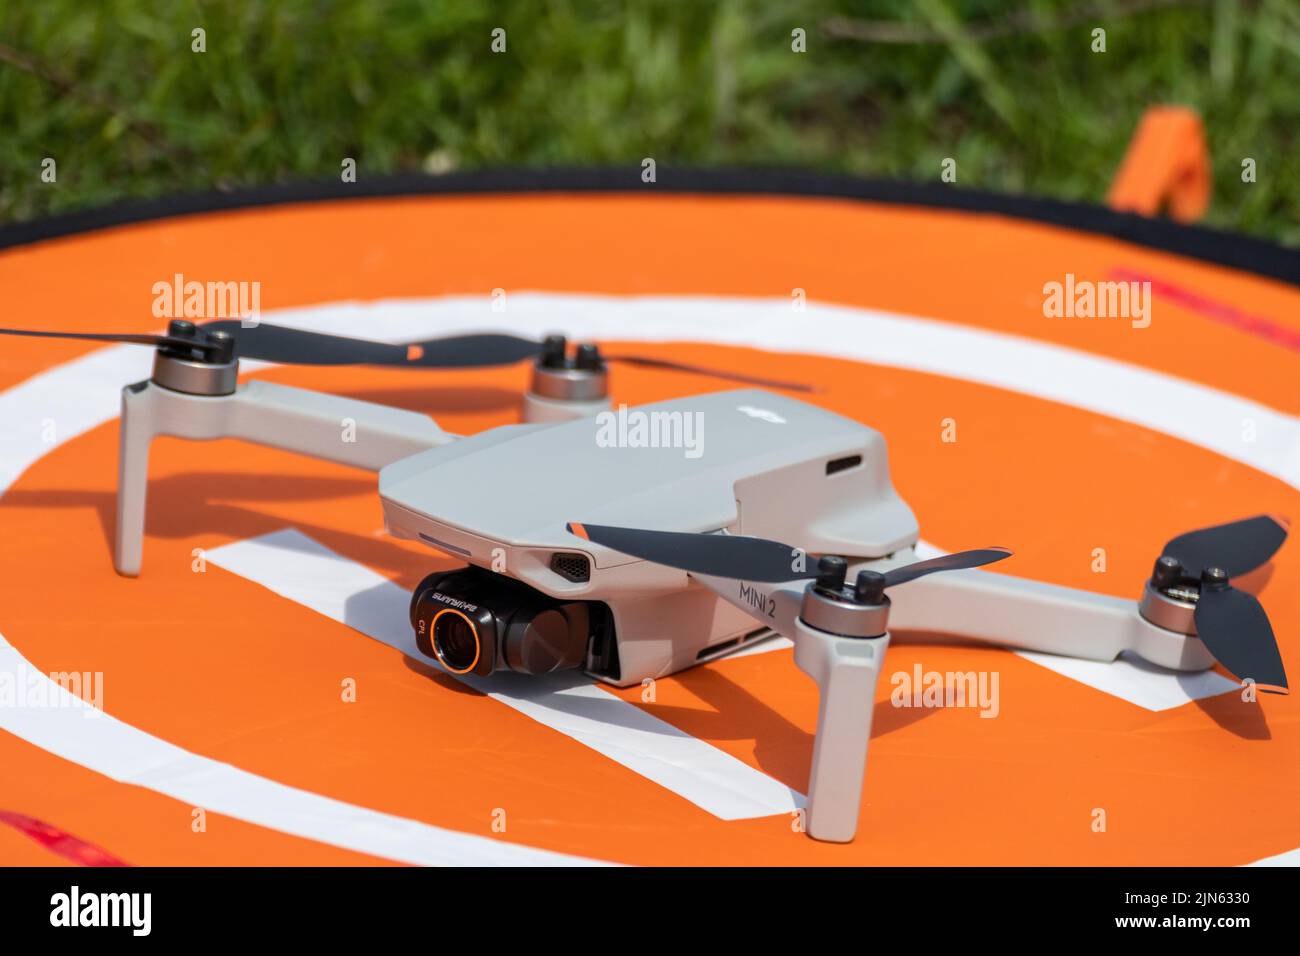 Reflective Drone Landing Pad Pro Helipad For DJI FPV Combo Drone